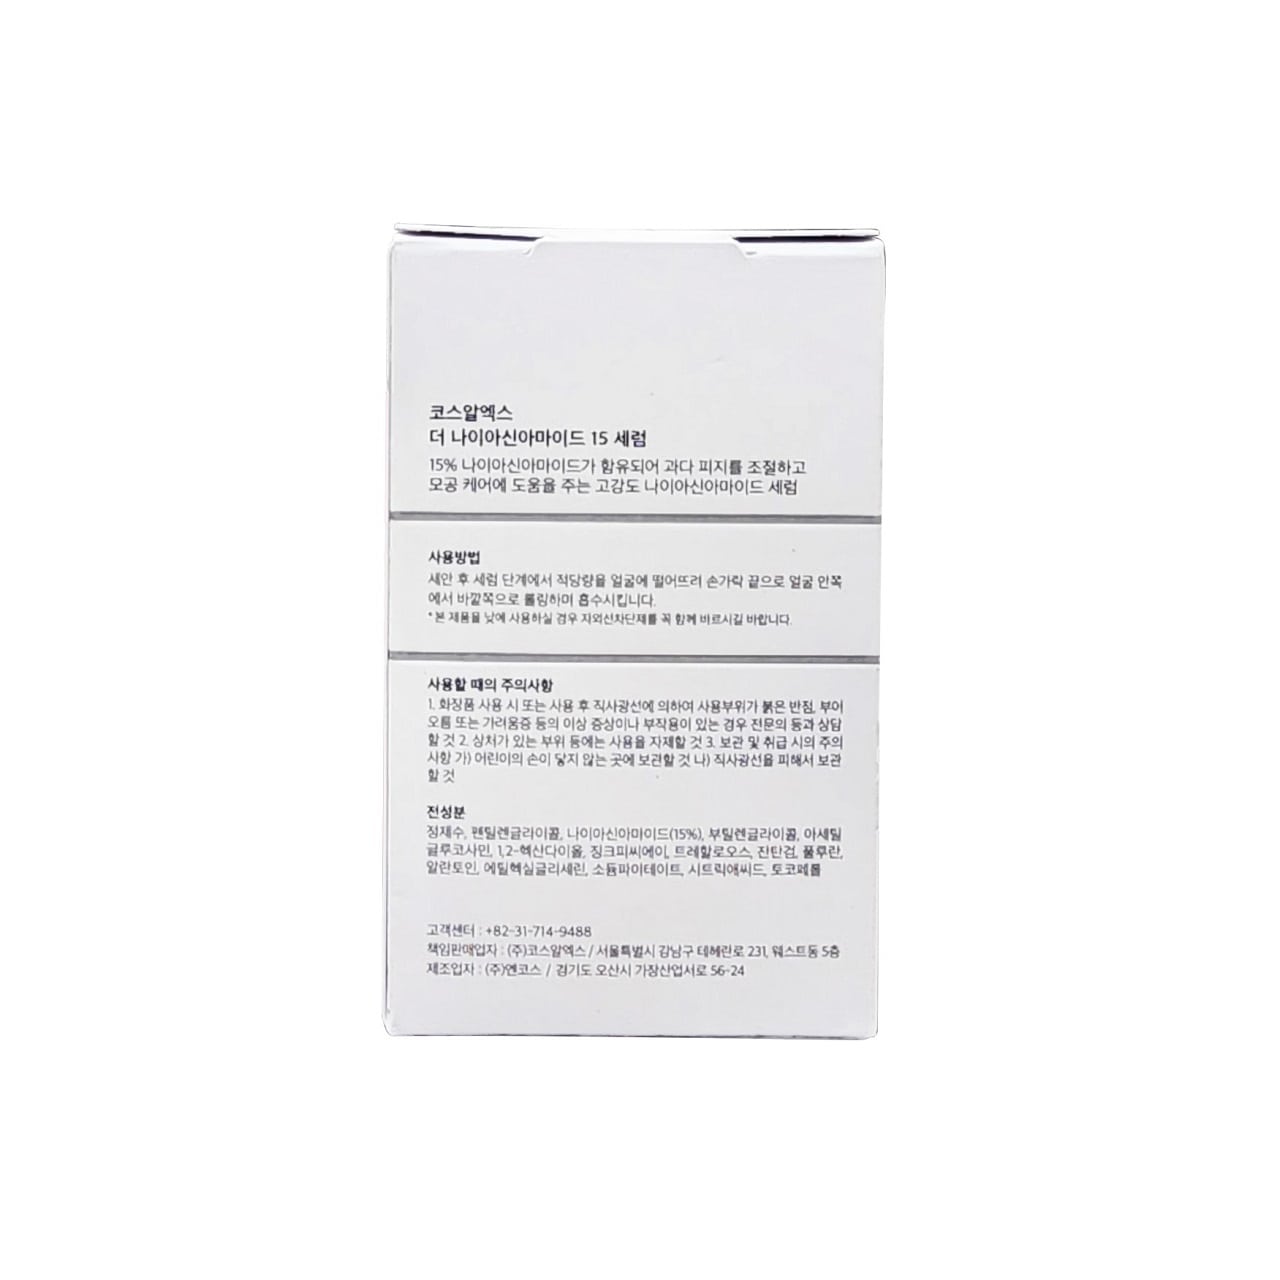 Description, direcitons, cautions, ingredients for COSRX The Niacinamide 15 Serum (20 grams) in Korean